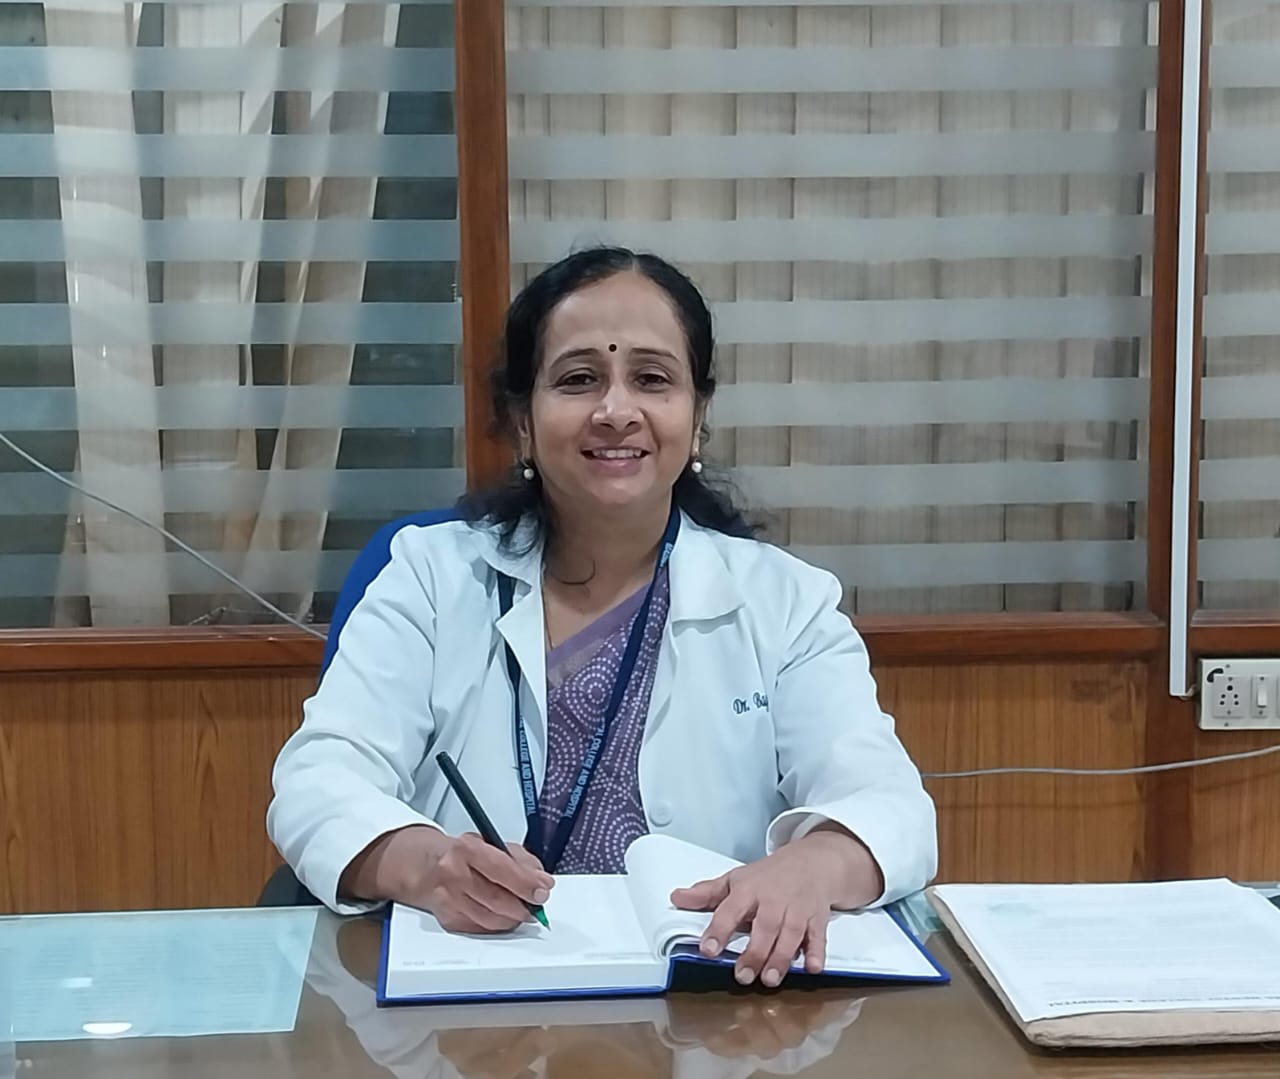 Dr. Bagavad Gita